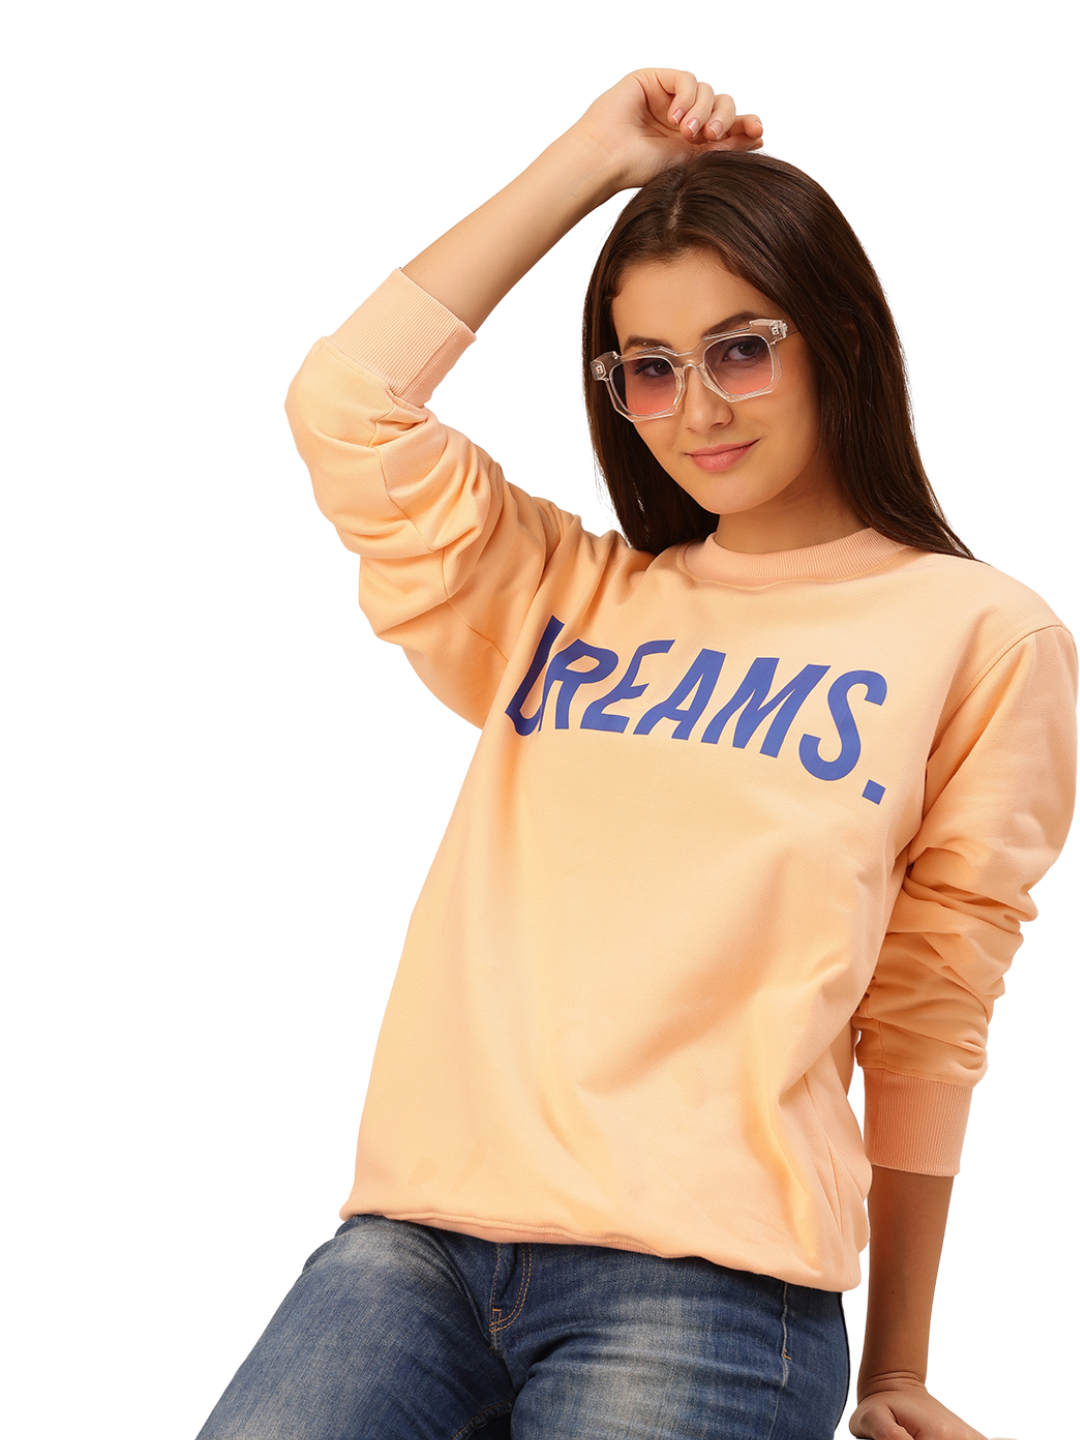 Dreams Peach Printed Sweatshirt